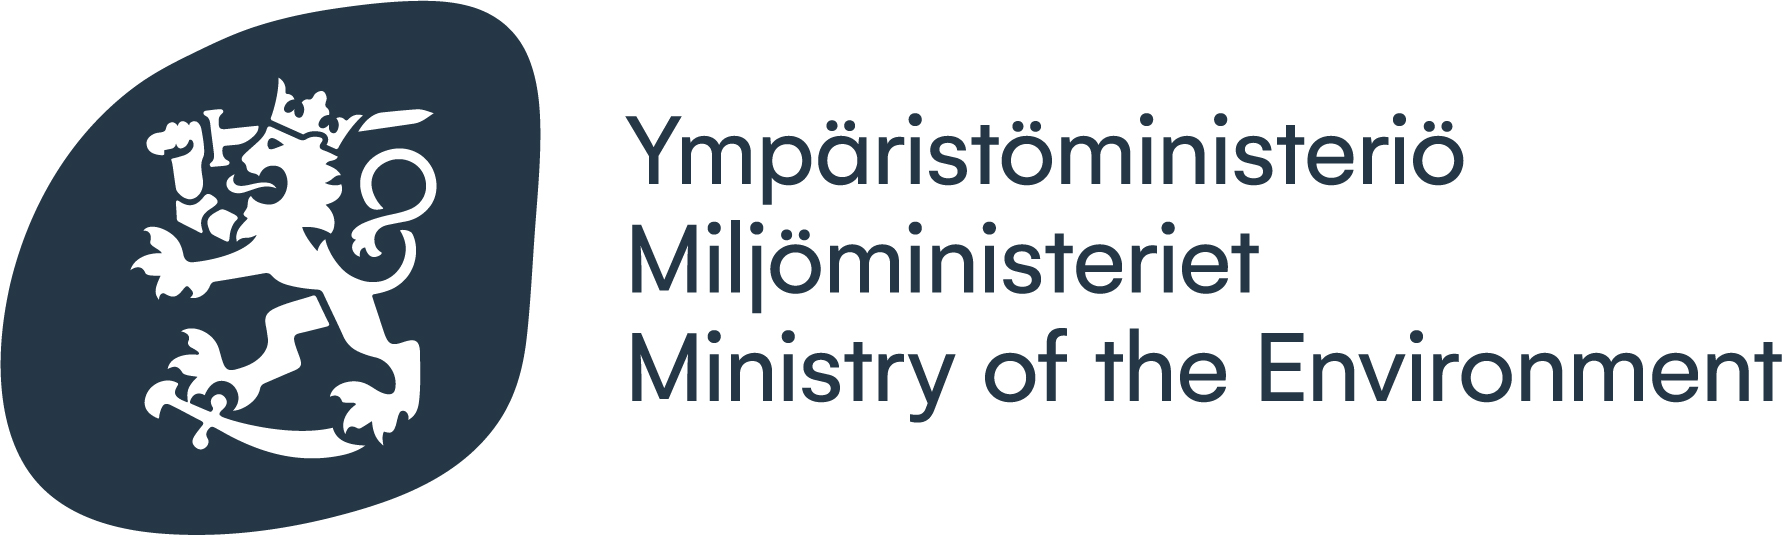 Ympäristöministeriön logo.